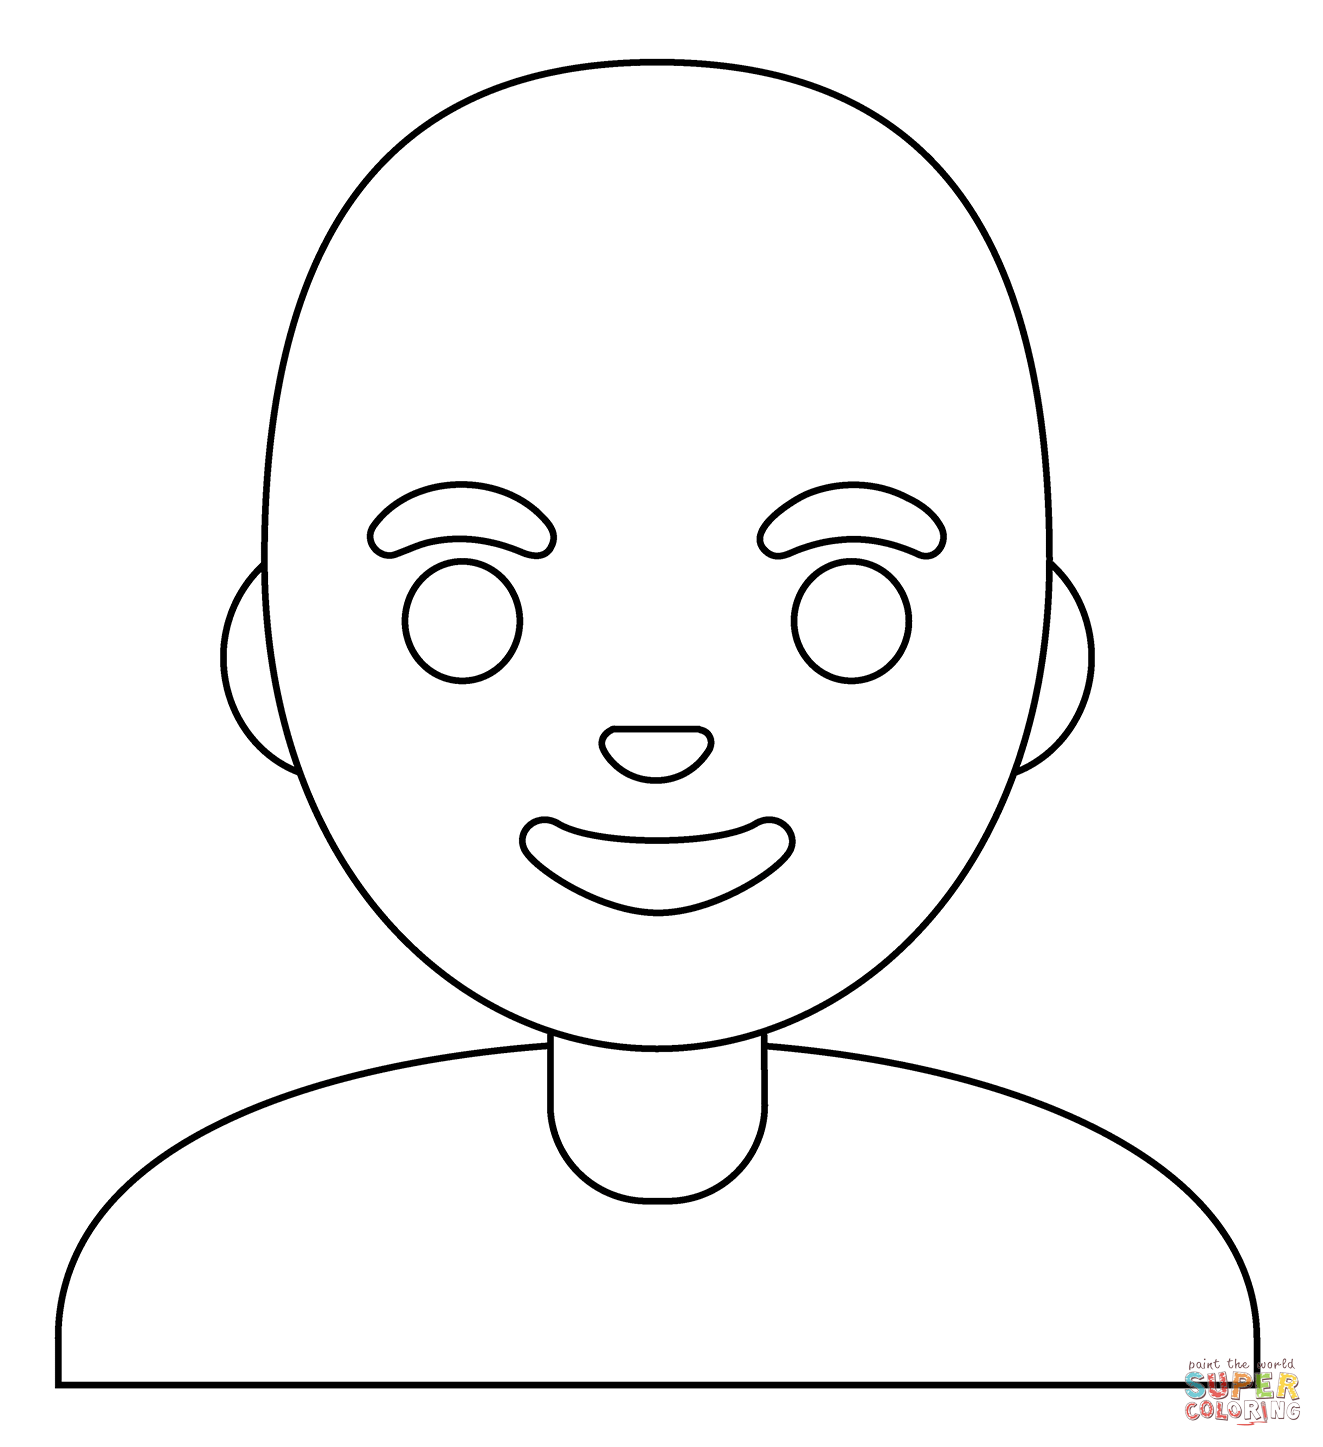 Man Bald Emoji coloring page | Free Printable Coloring Pages